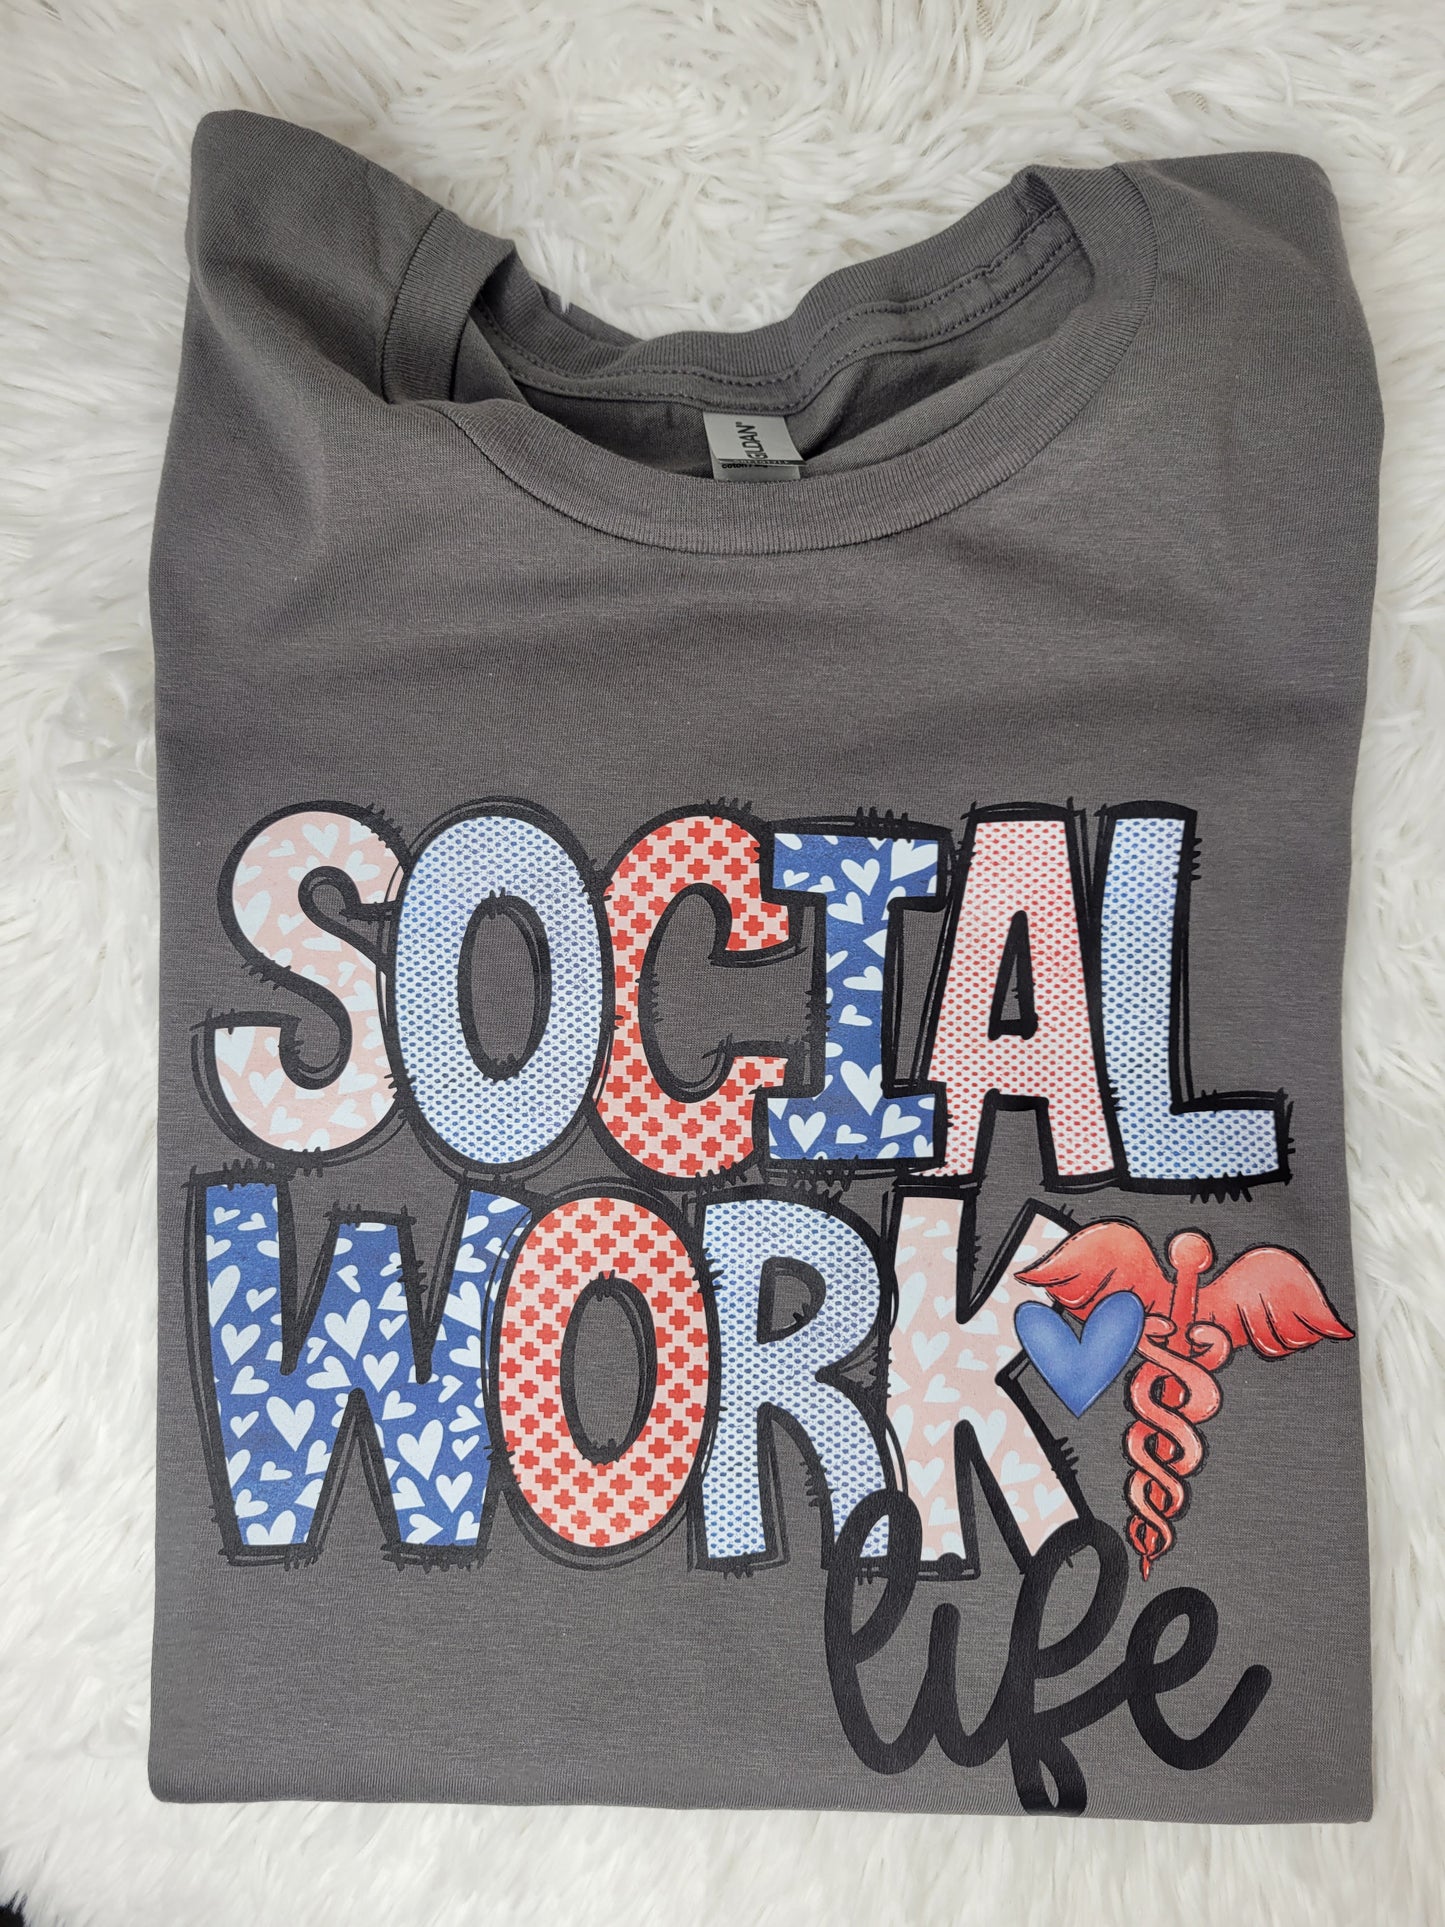 SOCIAL WORK LIFE